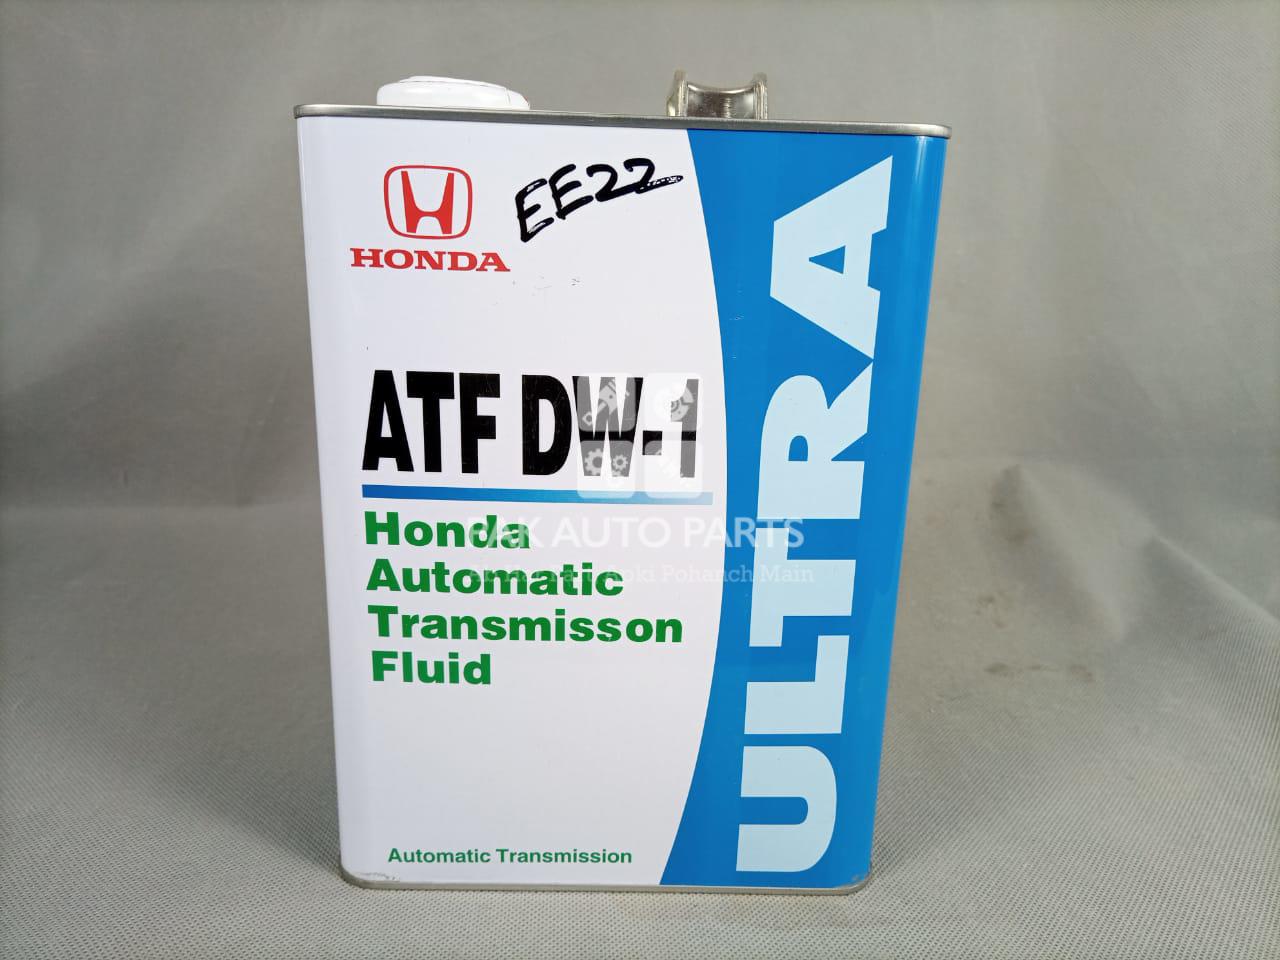 Honda ATF DW-1. Honda ATF dw1 4л артикул. Масло Honda ATF dw1 4 литра. ATF dw1 Honda железная банка. Atf dw1 honda